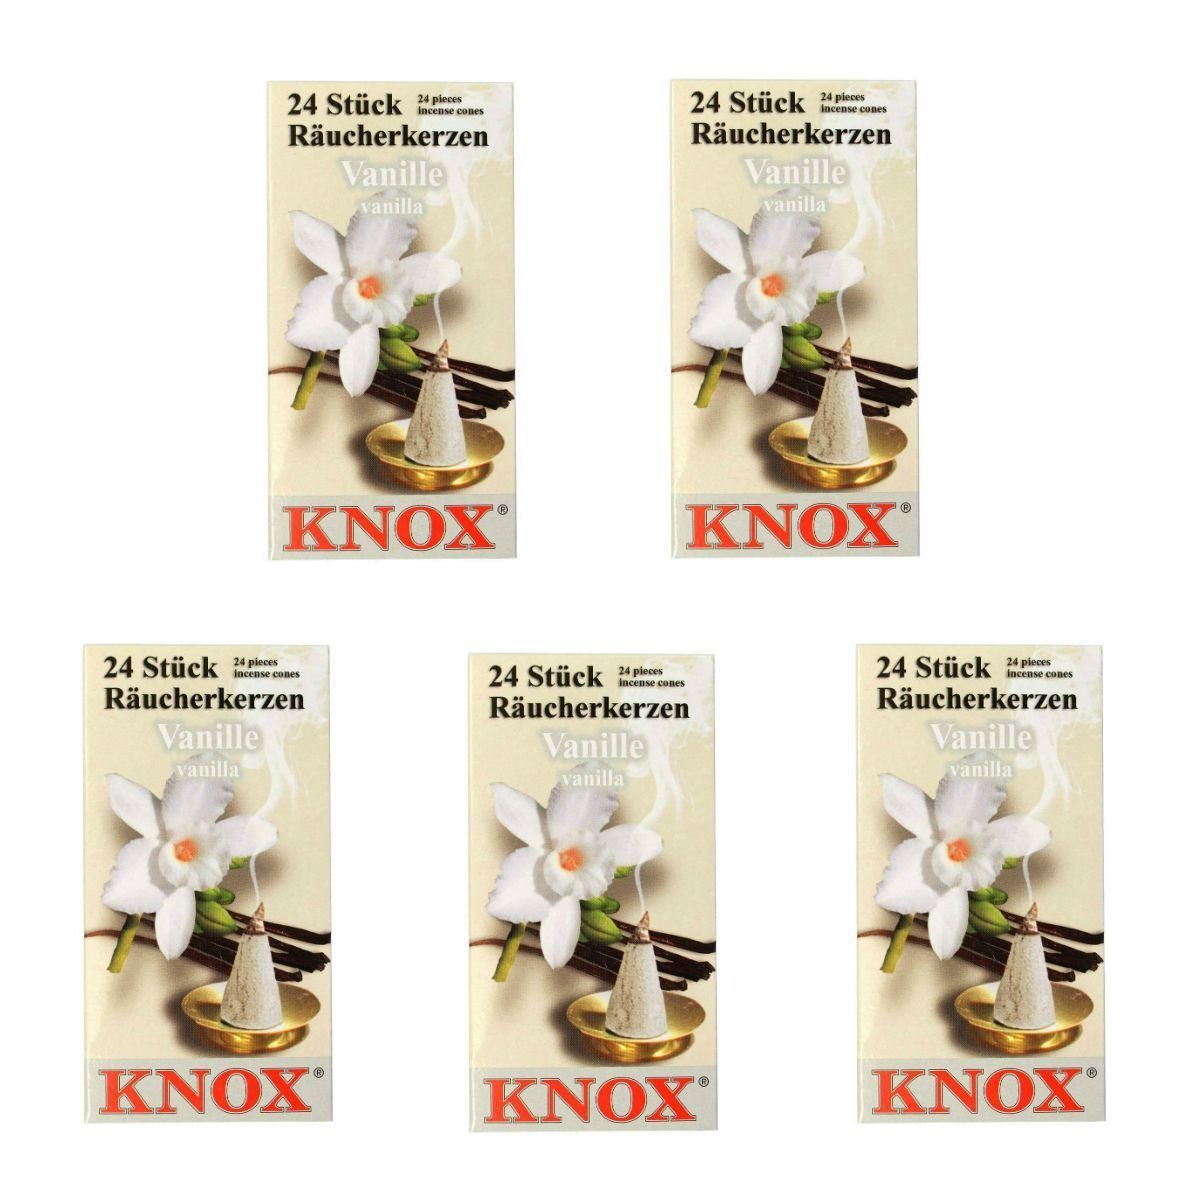 KNOX Räuchermännchen 5 Päckchen Räucherkerzen- Vanille - 24er Packung